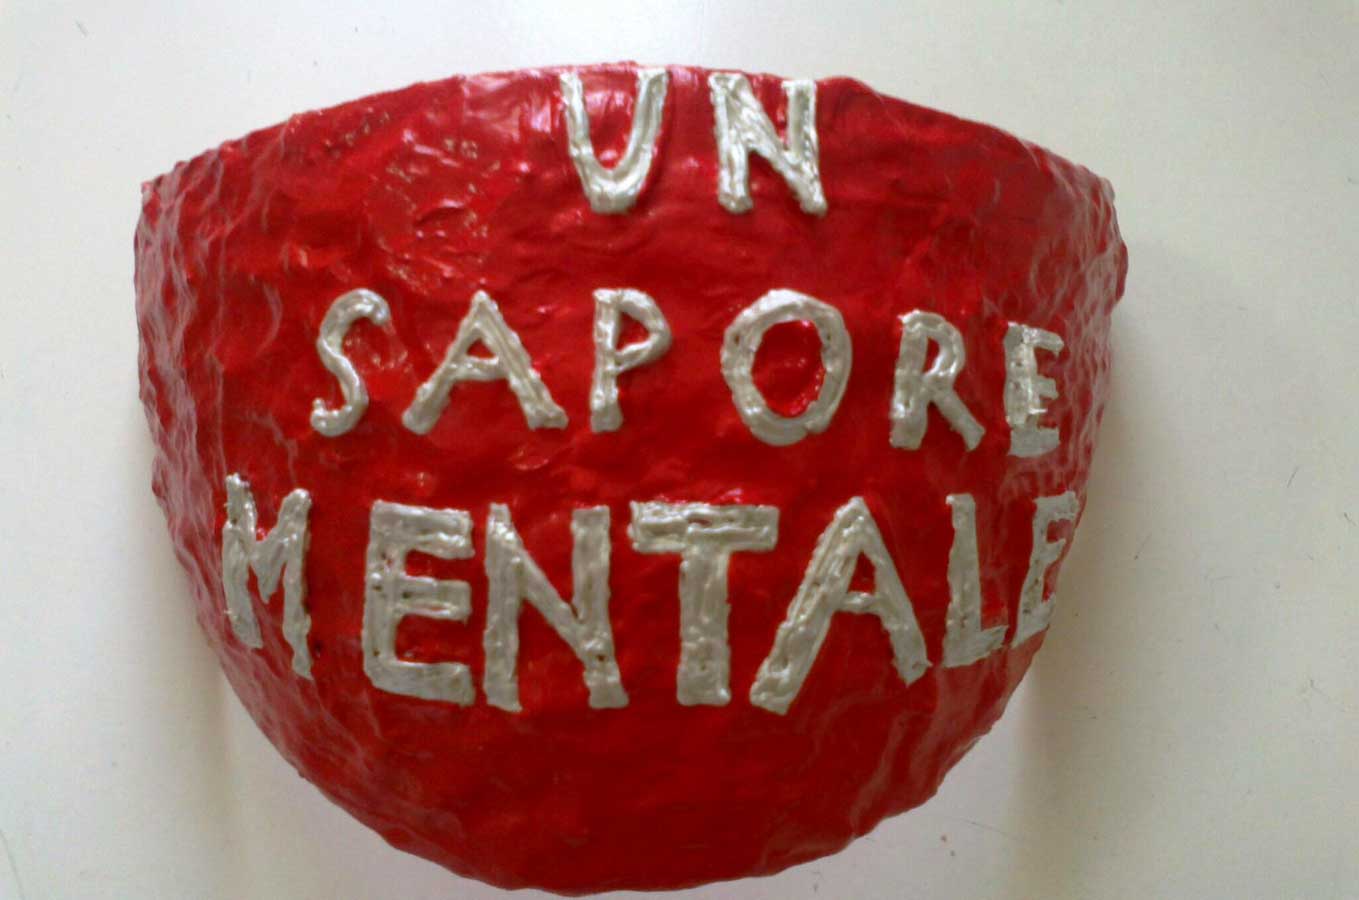 Un sapore mentale, painting by Nicola Guerraz, acrylic on mixed media, 48 x 19 cm, 2012